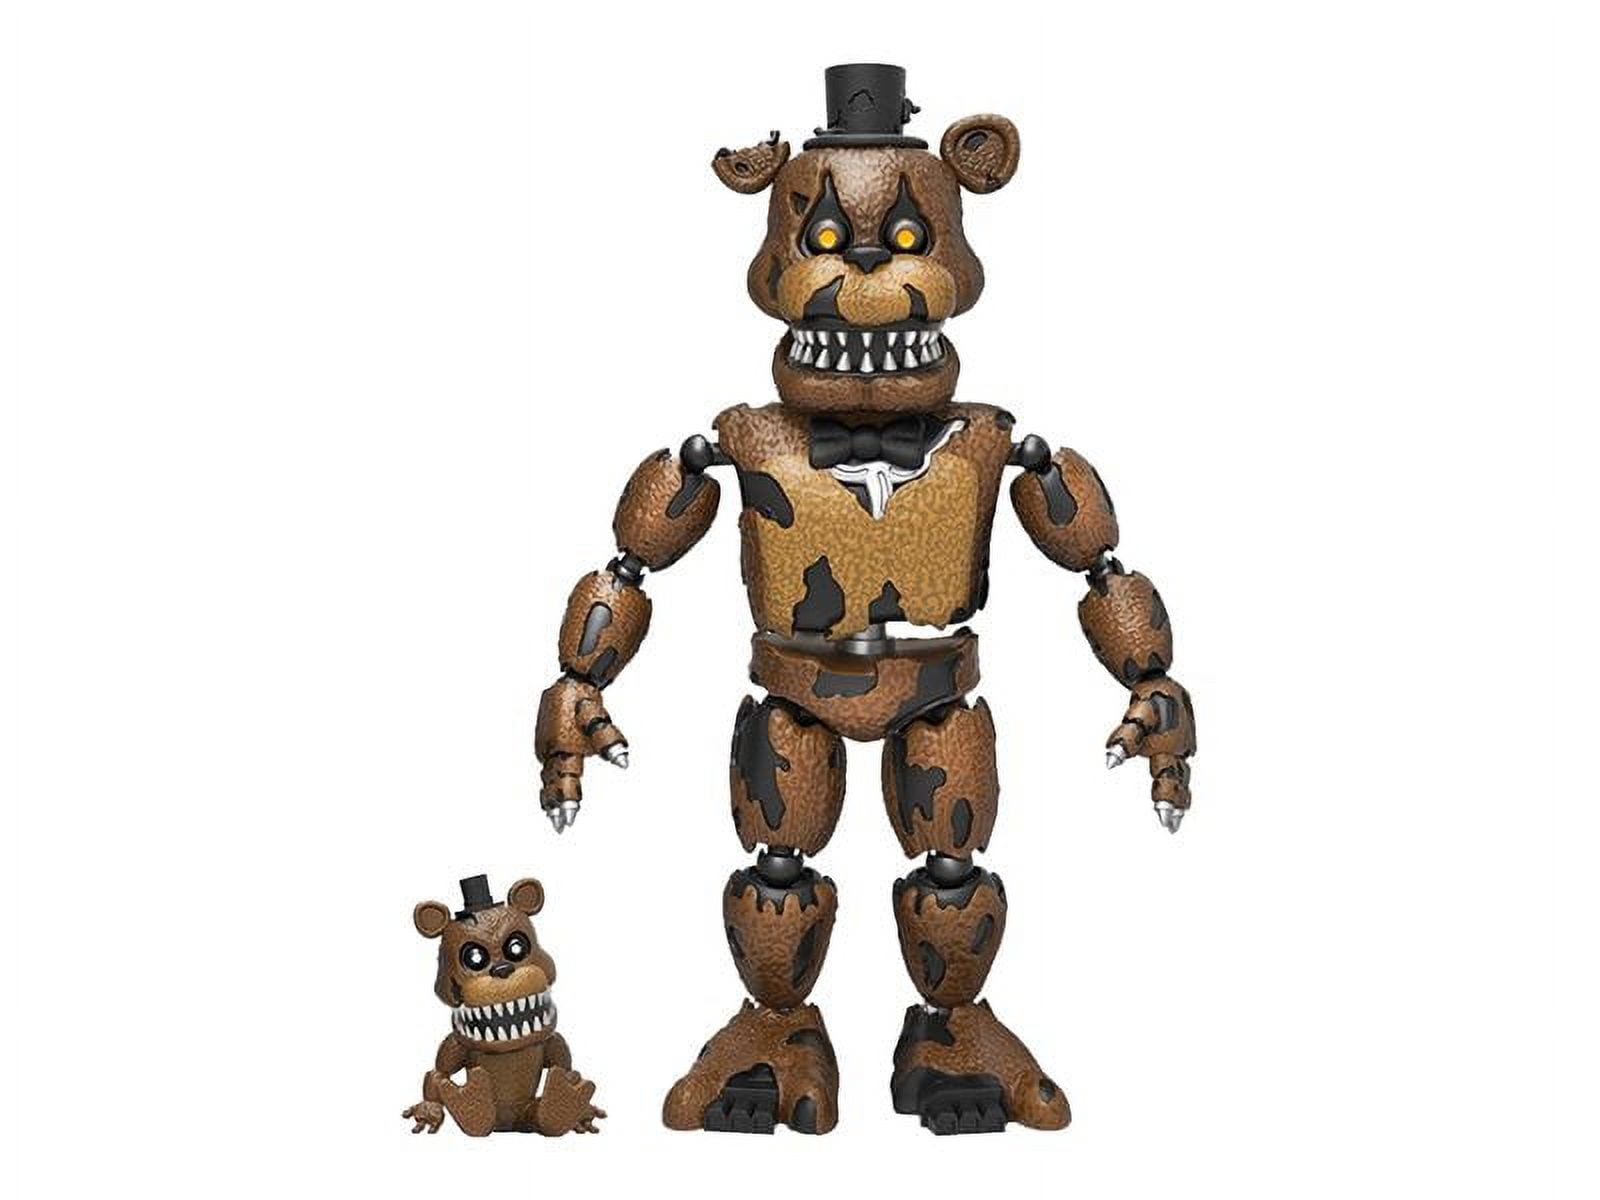 Five Nights At Freddy's Funko Nightmare Freddy Toy Action Figure FNaF  Figurine